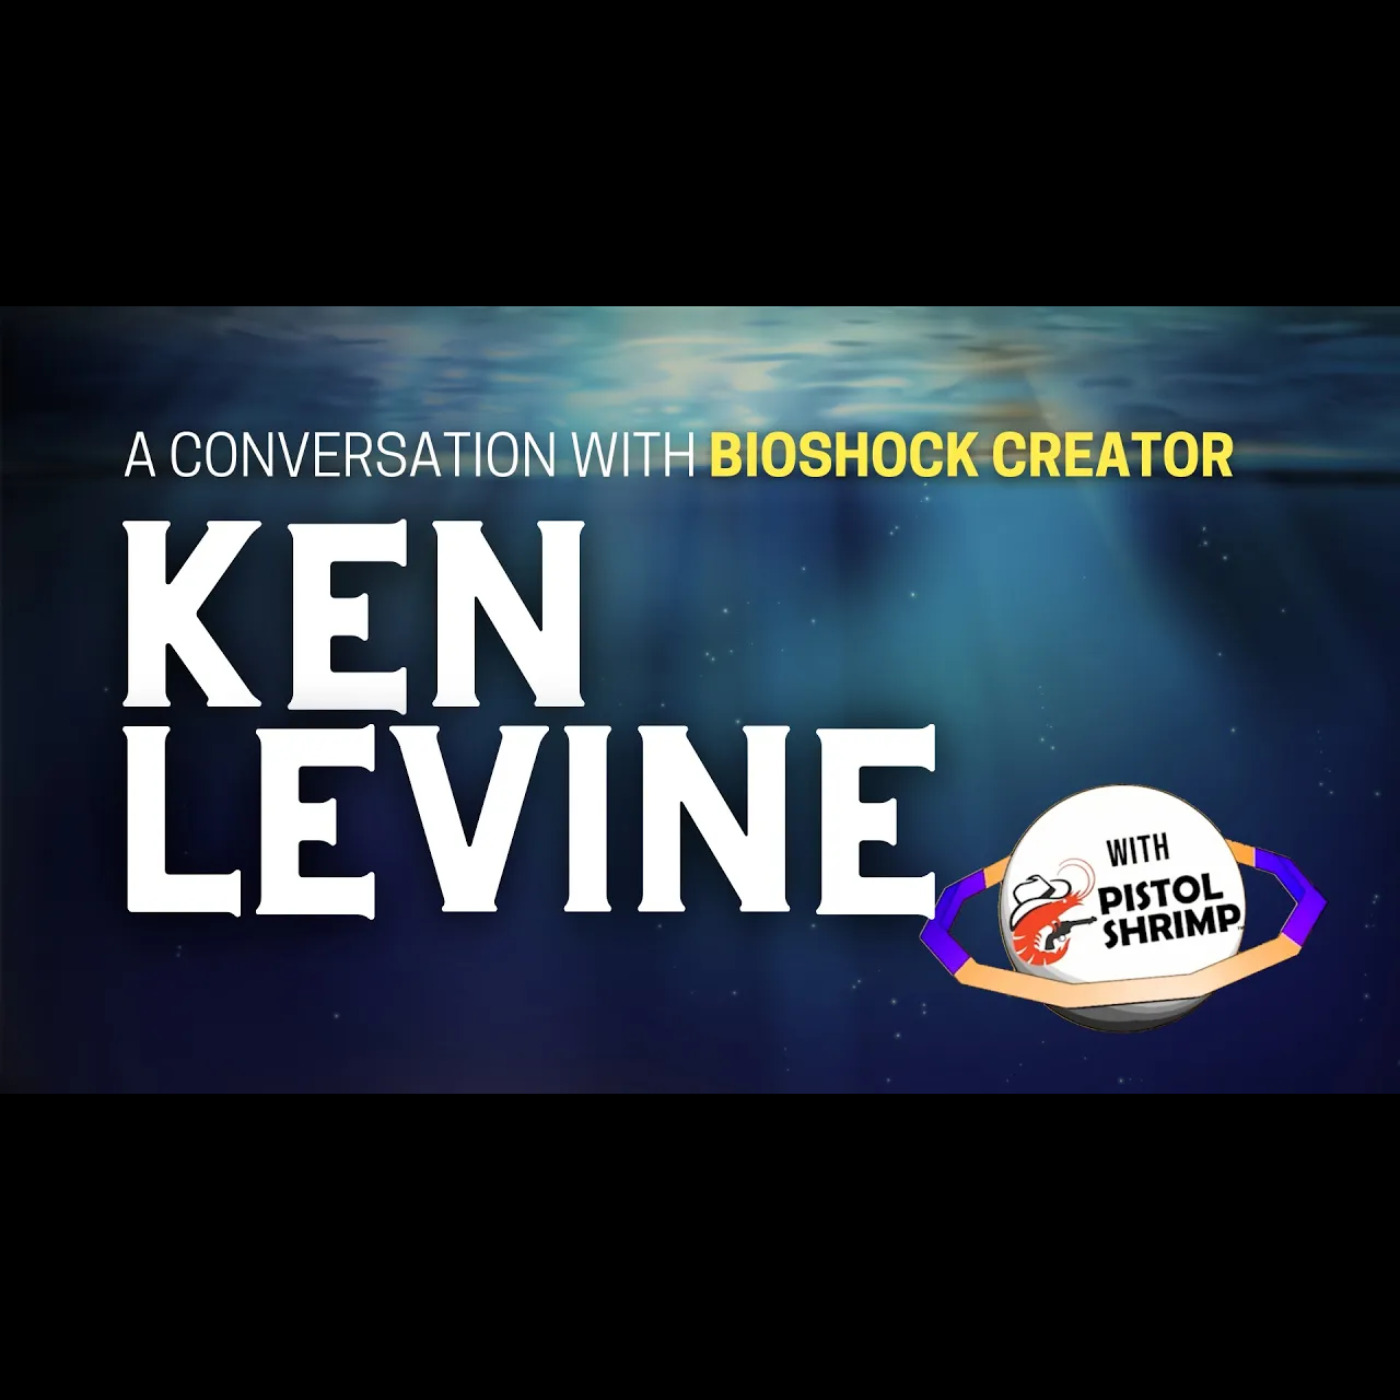 Channel 44: A Conversation with Ken Levine